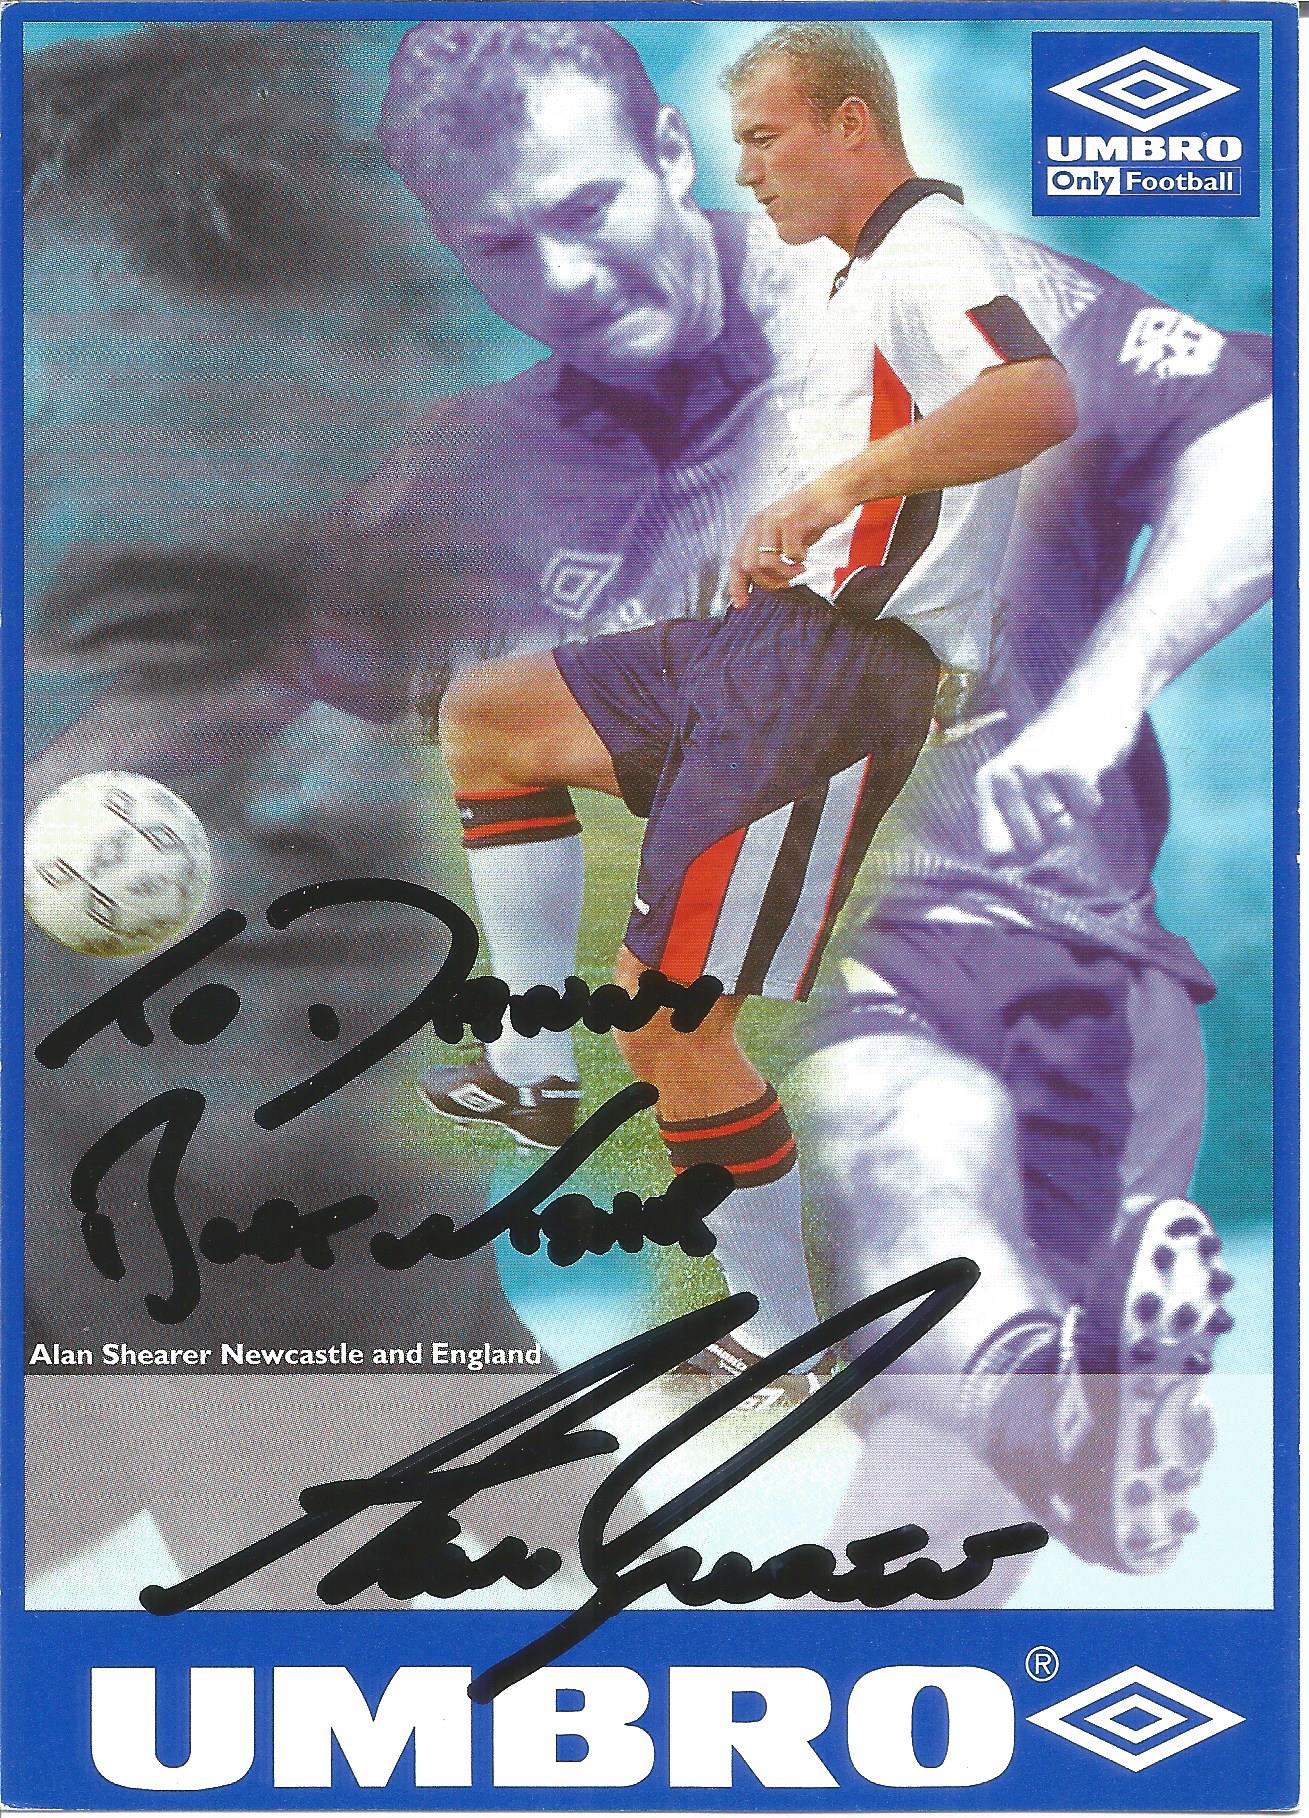 Alan Shearer Signed England Umbro Promo Photocard. Good condition. All autographs come with a